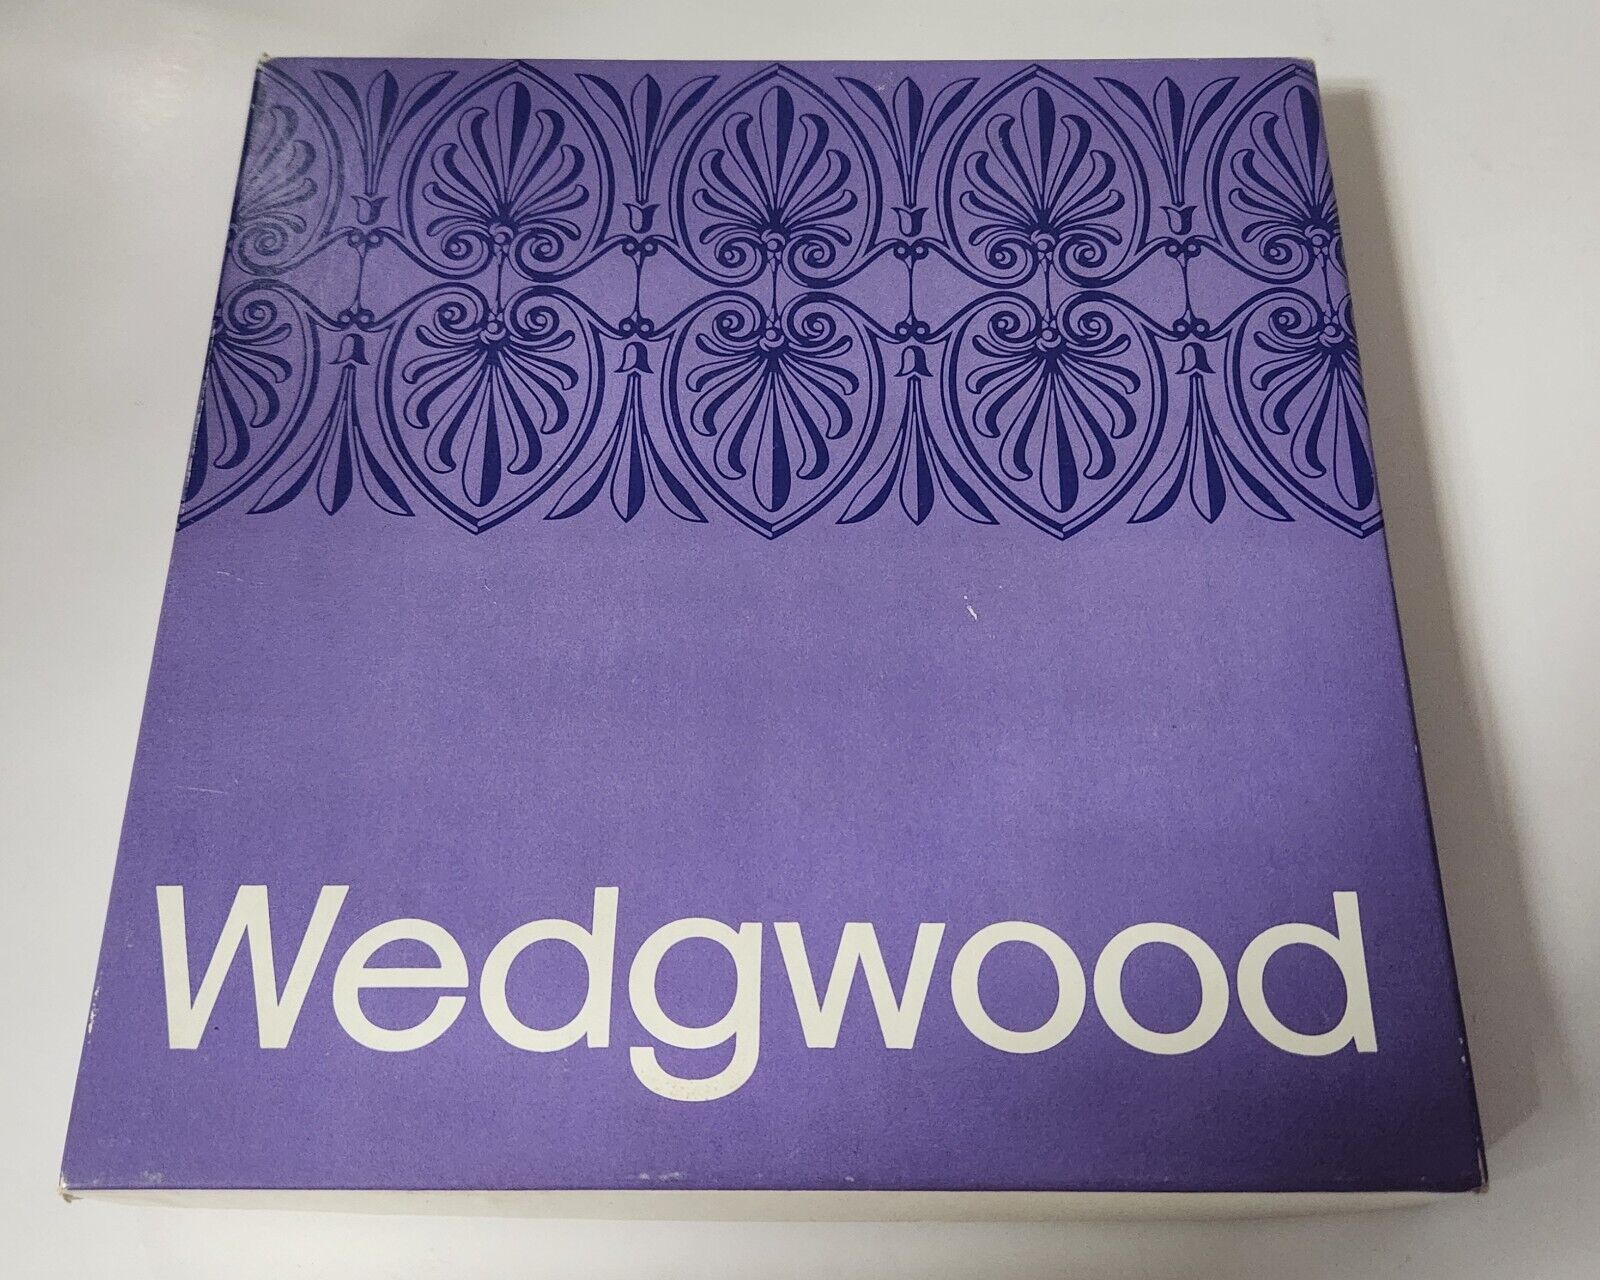 1971 Wedgewood Black Basalt Jasperware ‘Mother’ Collector’s Plate